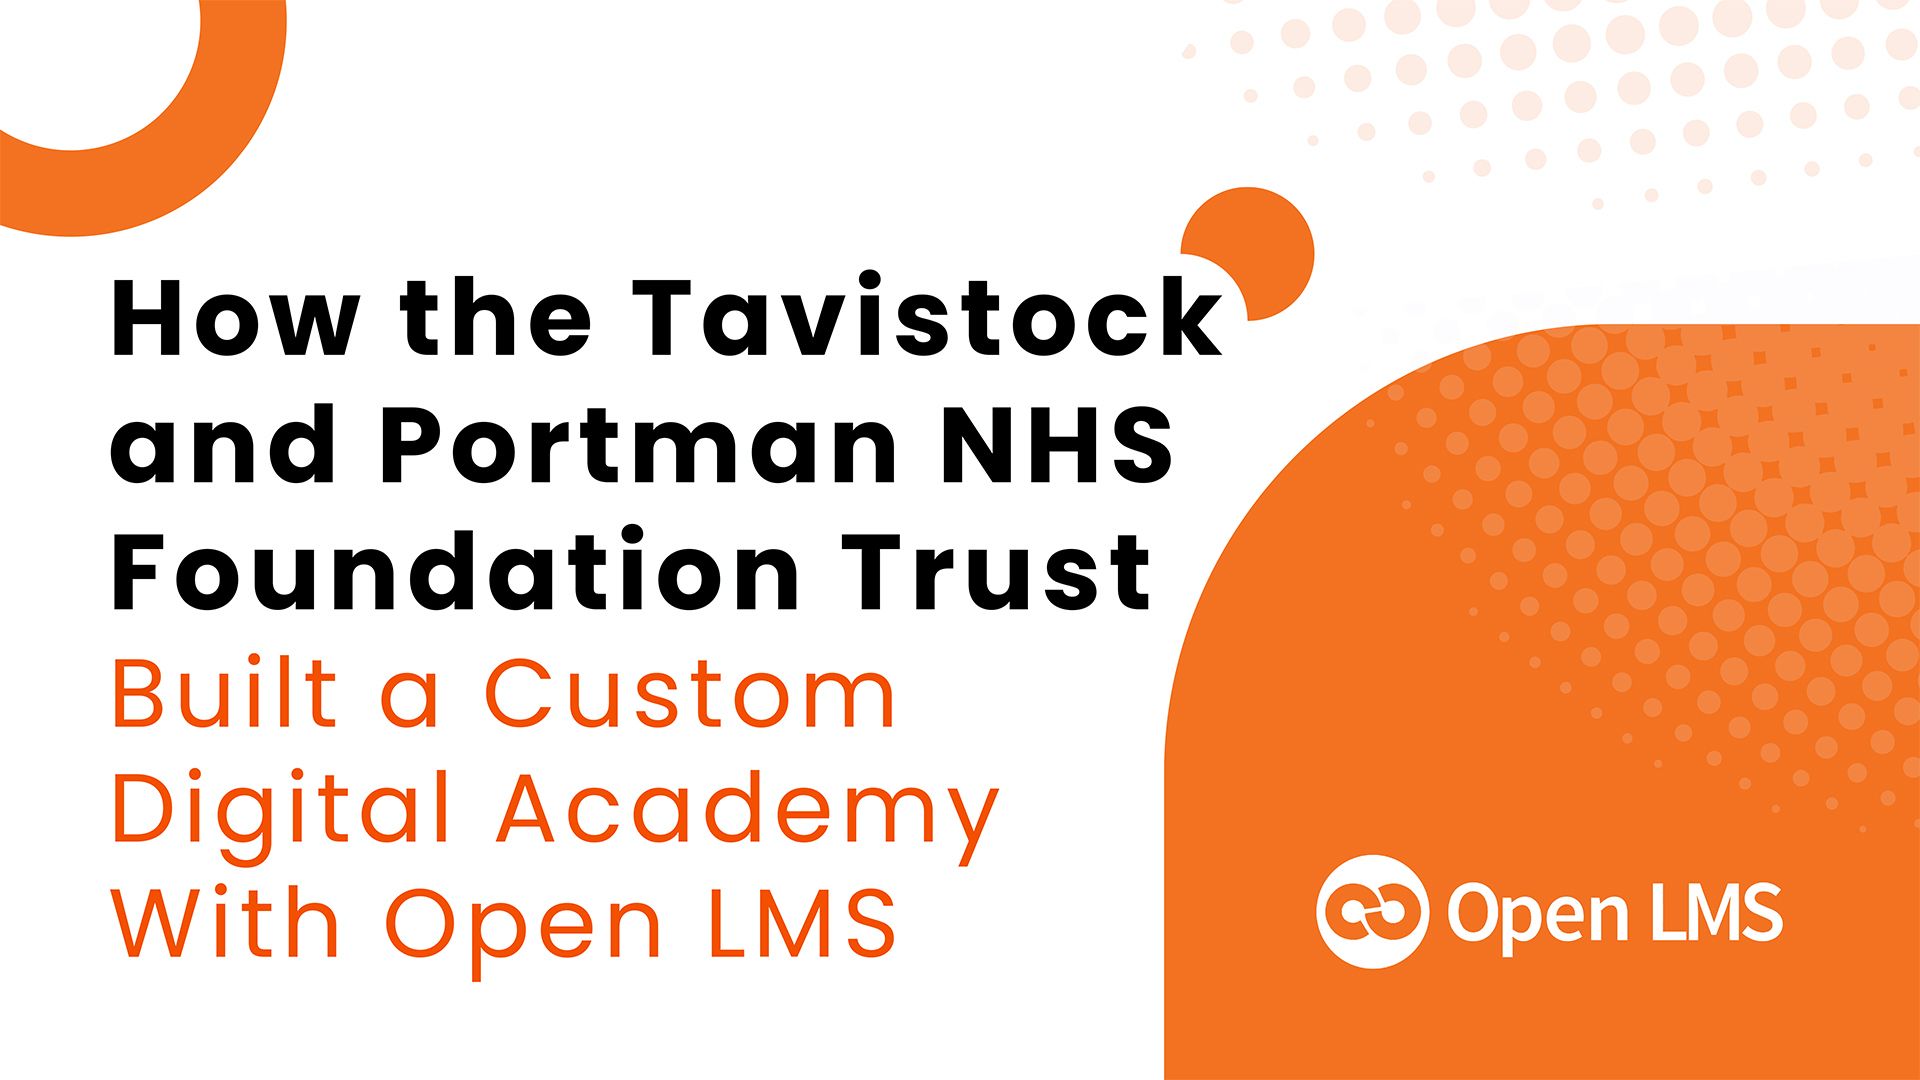 How the Tavistock and Portman NHS Foundation Trust Built a Custom Digital Academy With Open LMS